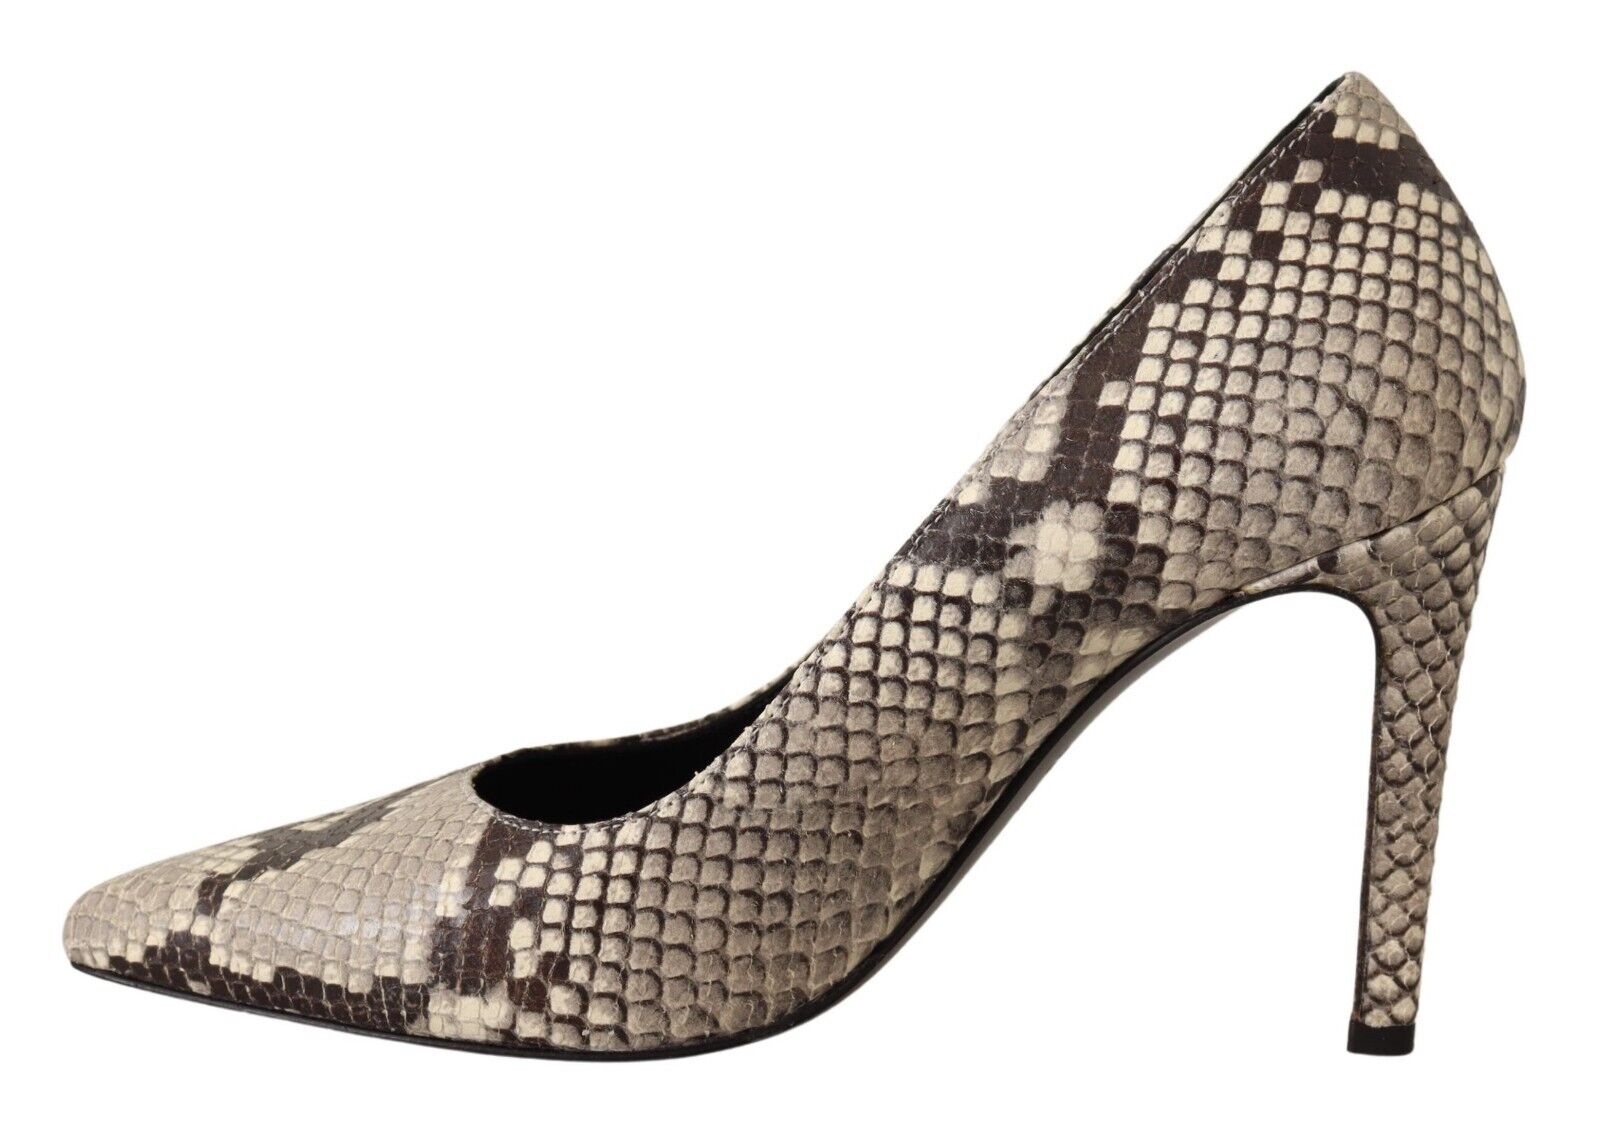 Sofia Gray Snake Skin Leather Stiletto High Heels Pumps Shoes - Fizigo